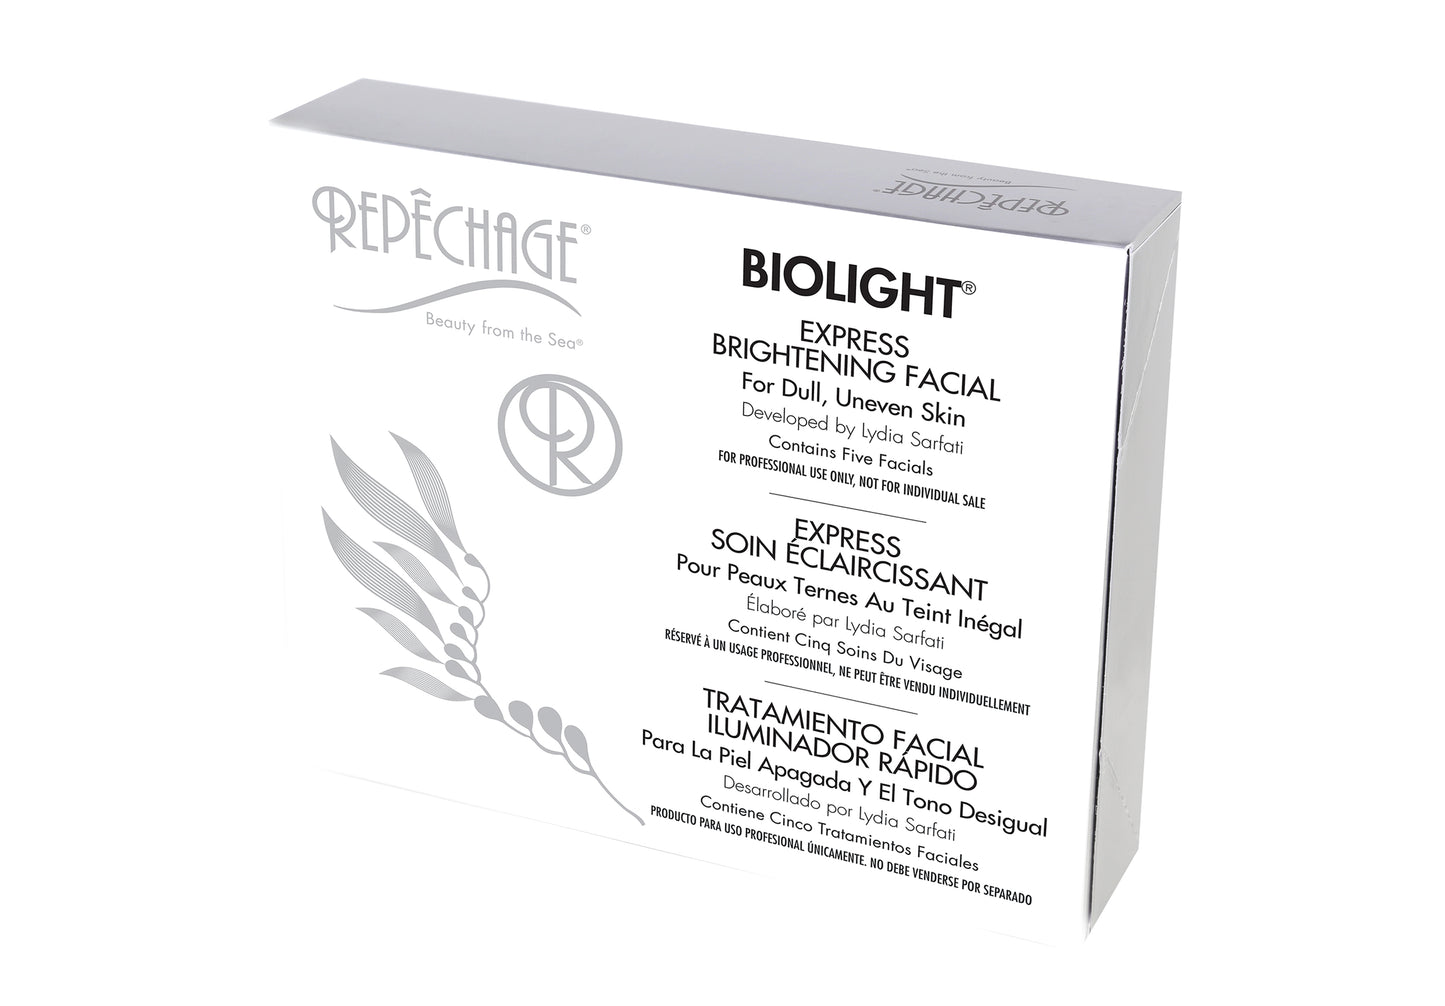 Repechage Biolight Brightening Express Facial, 5 Treatments